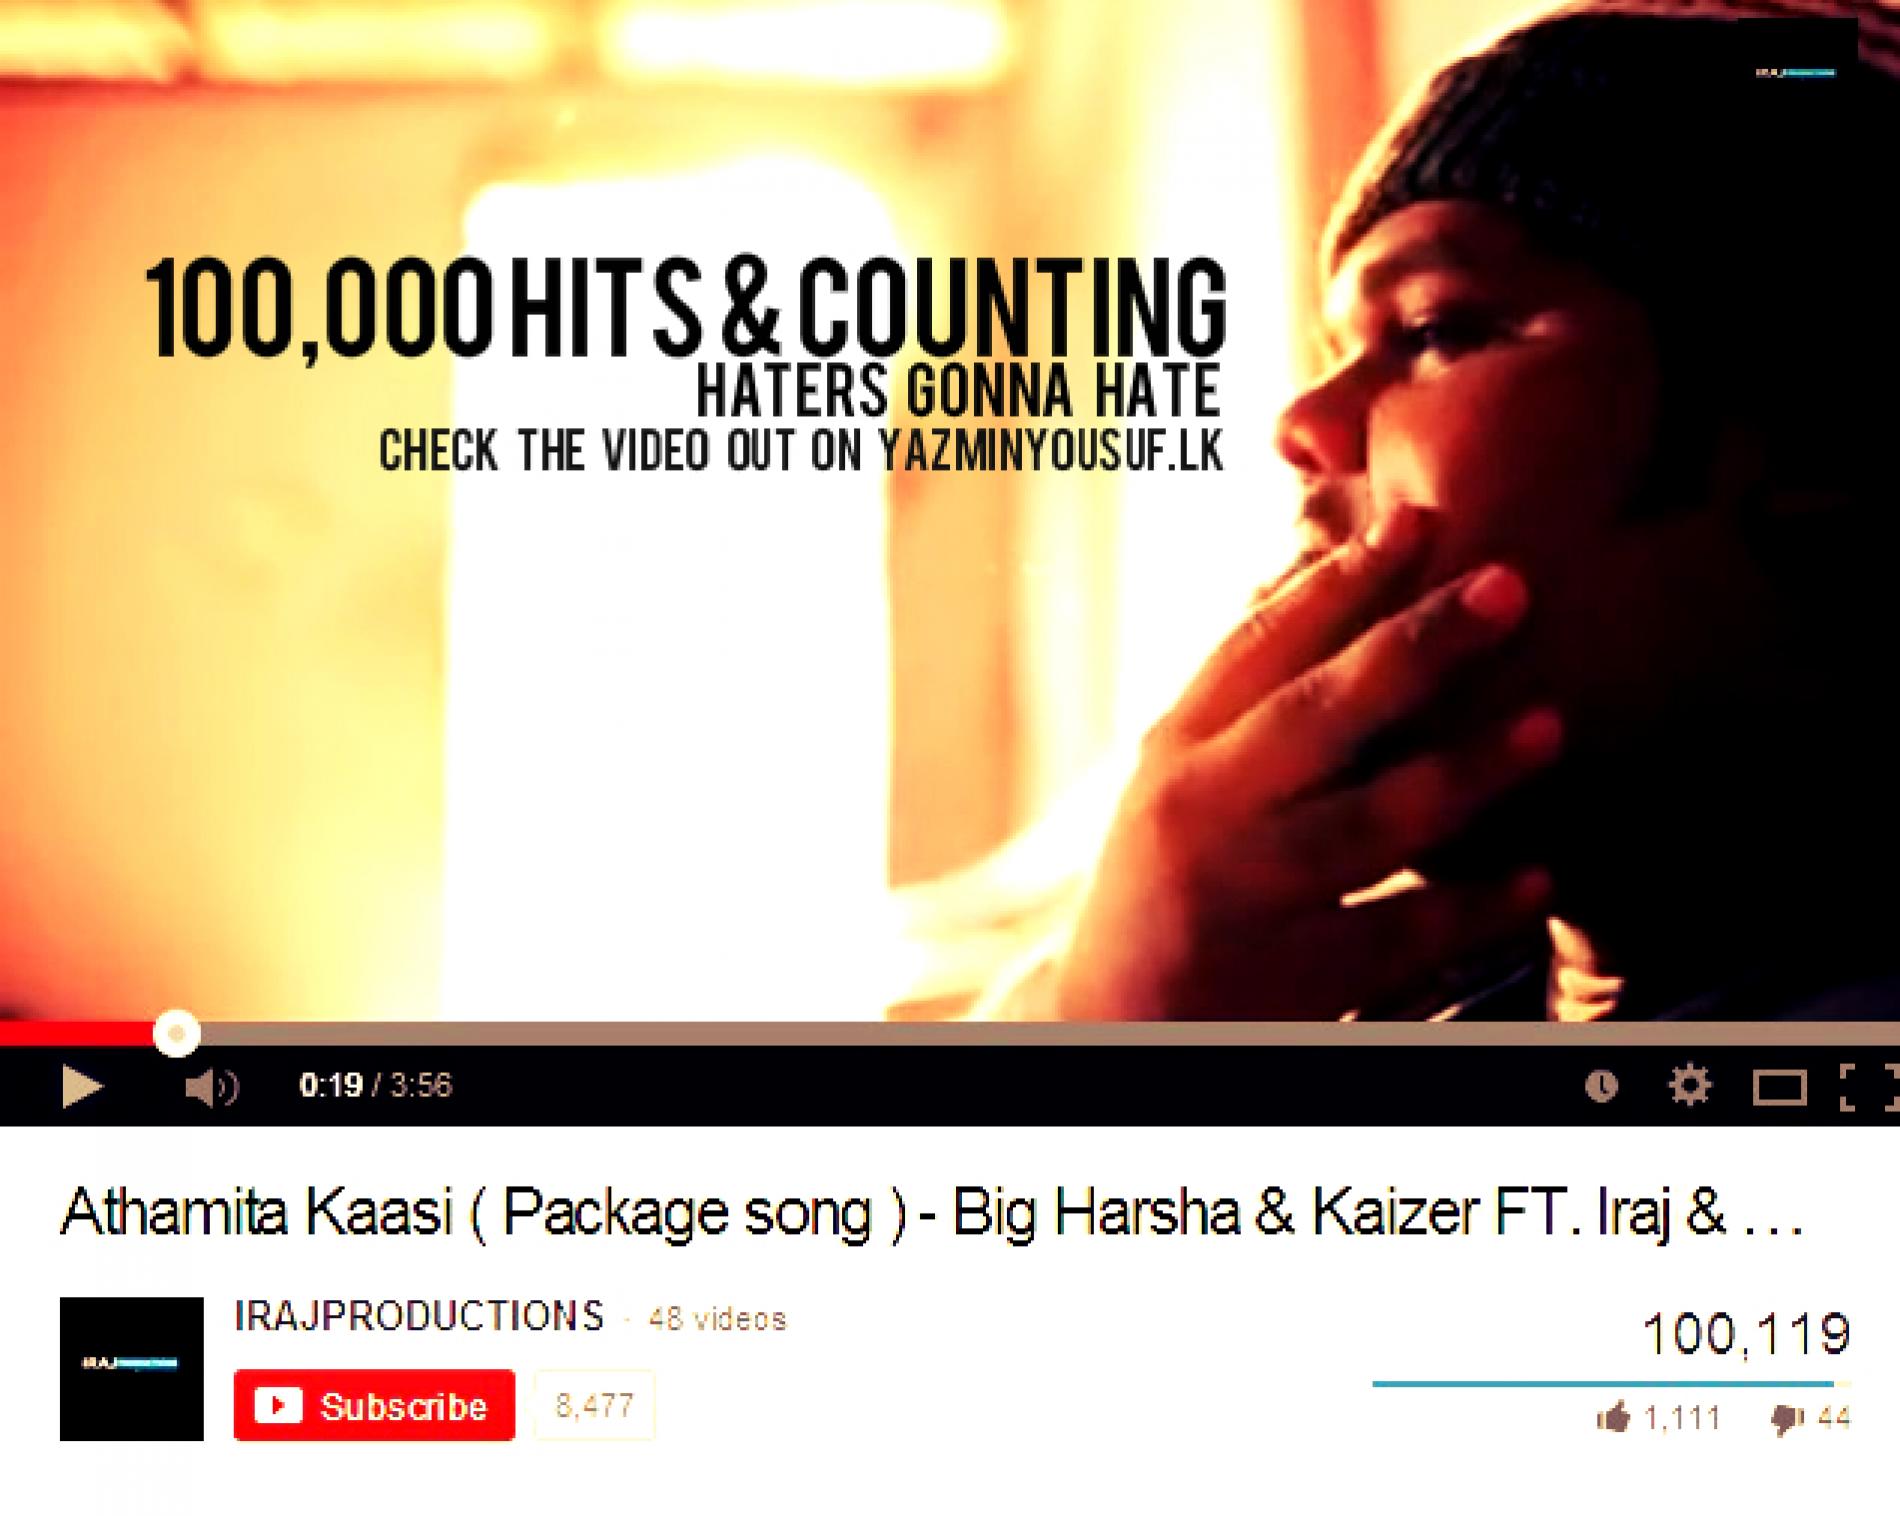 Congratz To Big Harsha On Reaching 100,000 Hits